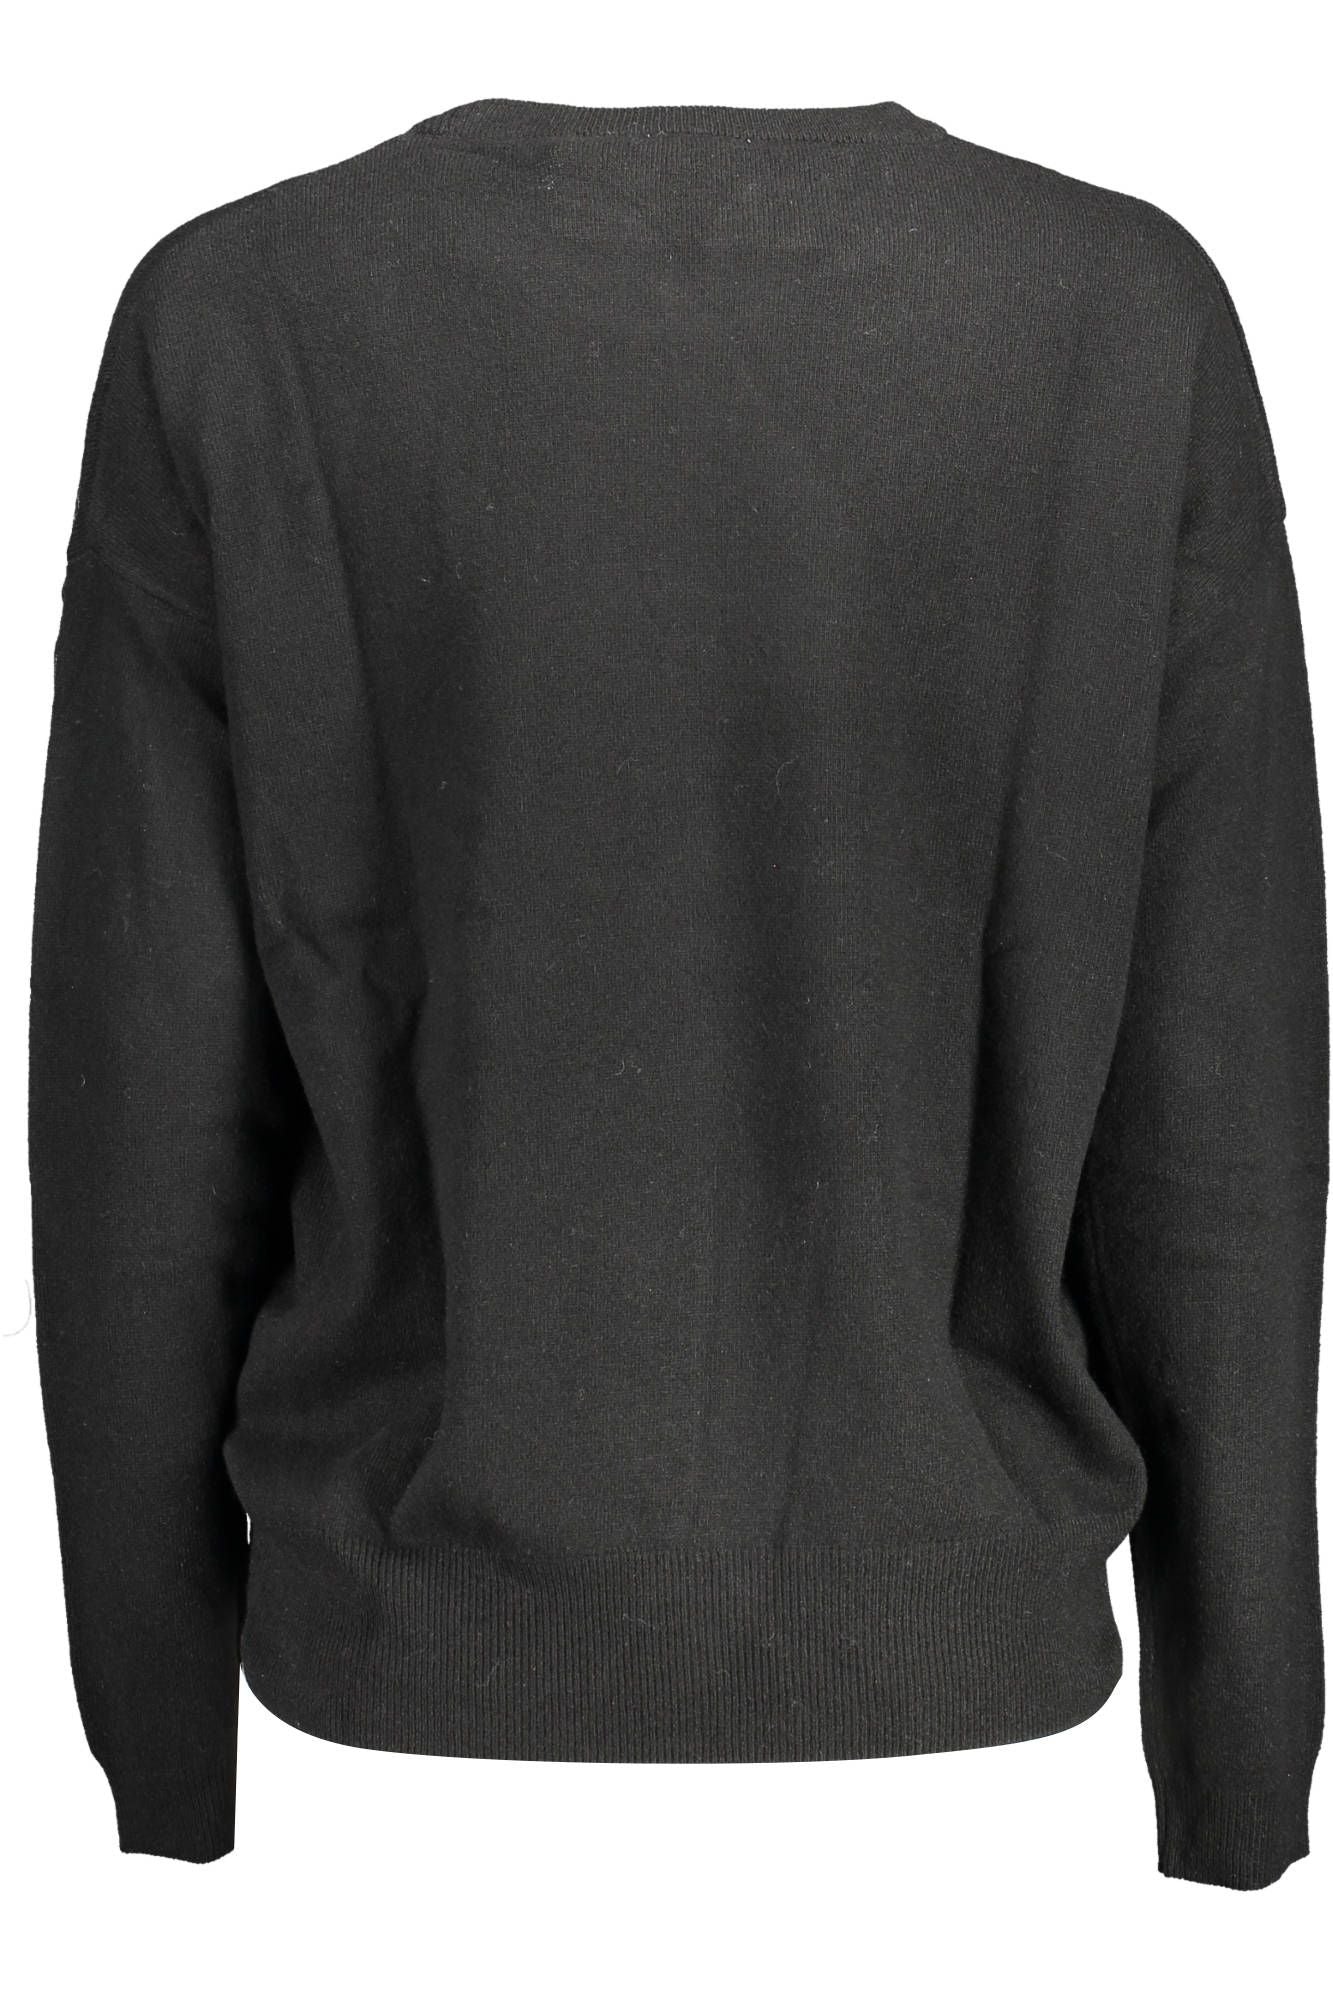 U.S. Polo Assn. Women's Black Wool Round Neck Sweater